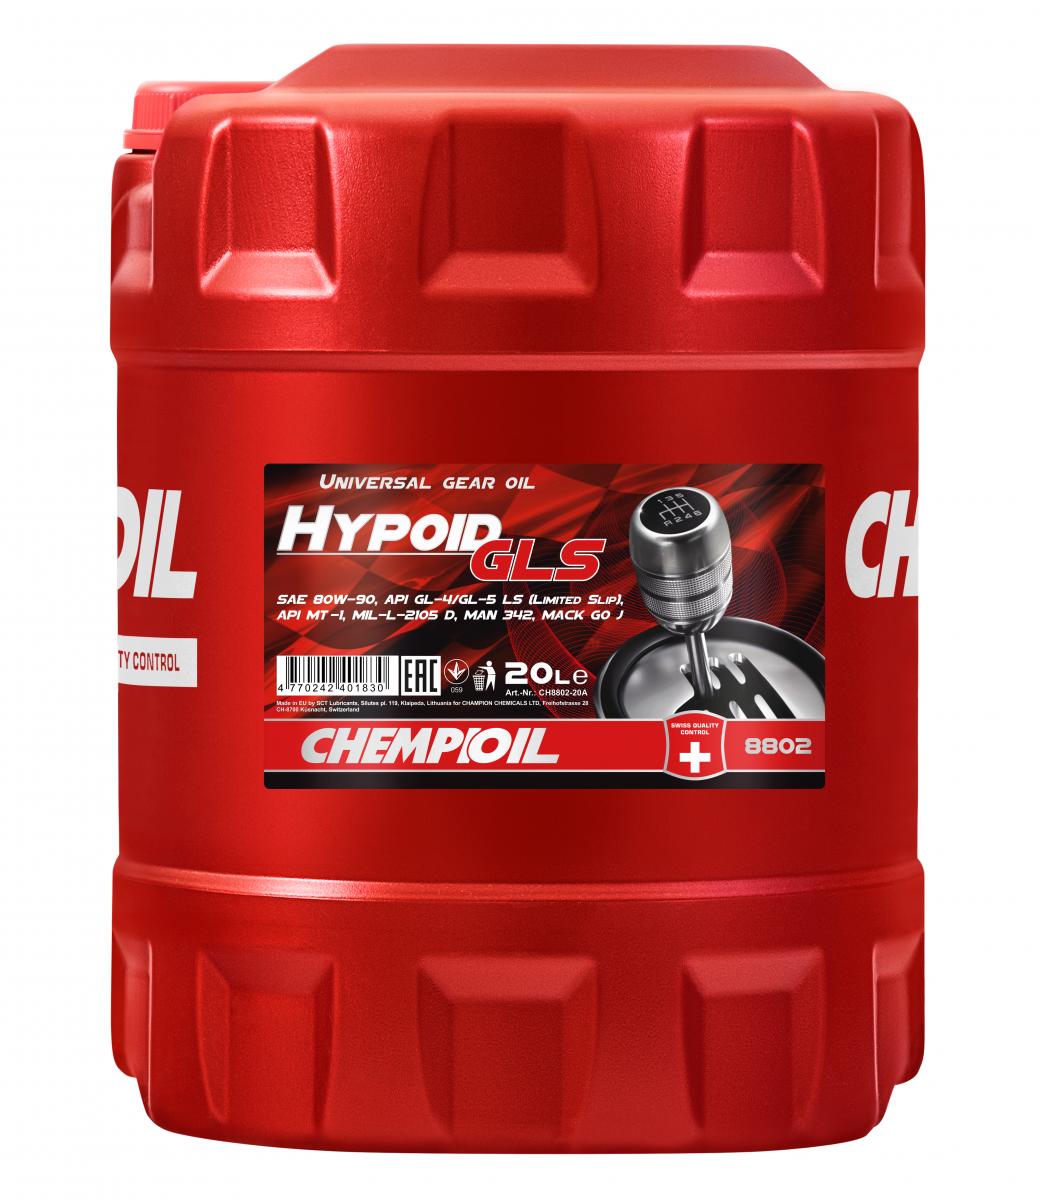 Chempioil 8802 Hypoid GLS 80W-90 GL-4/5